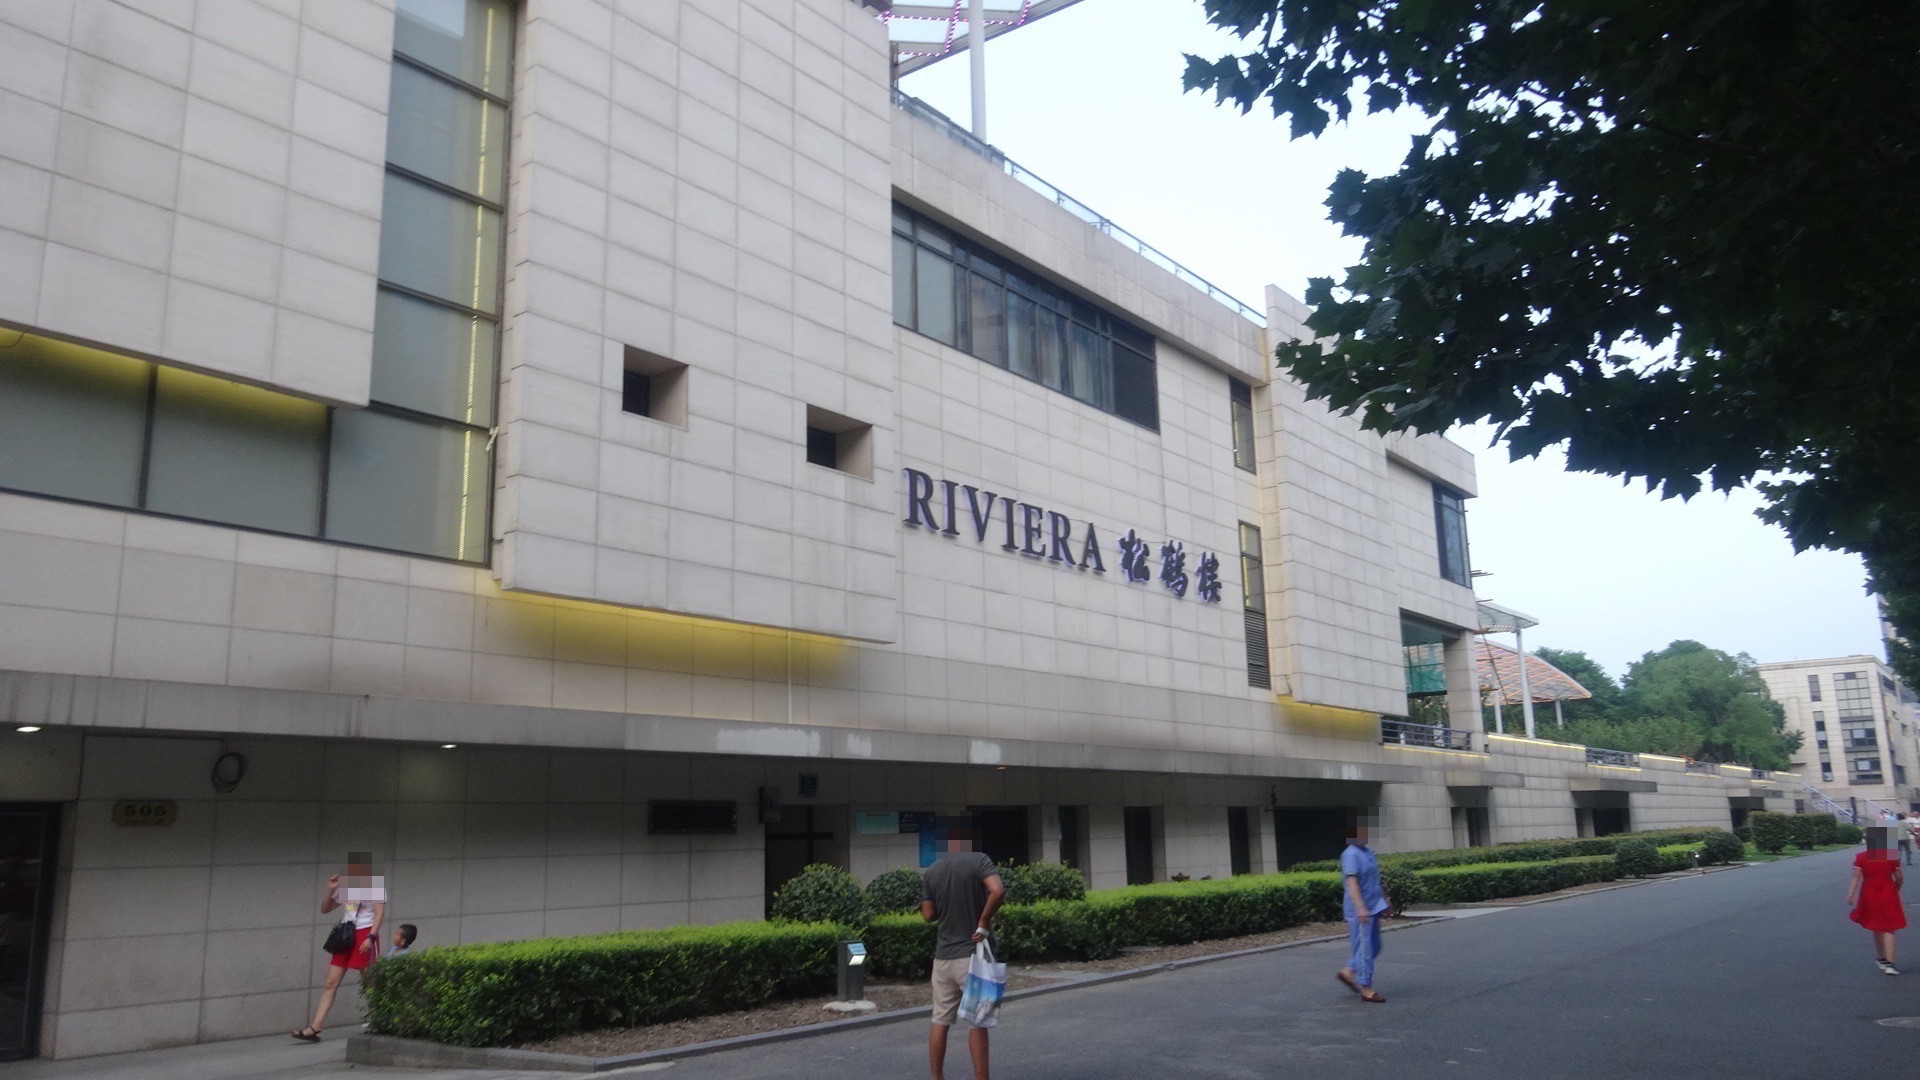 Riviera 松鹤楼